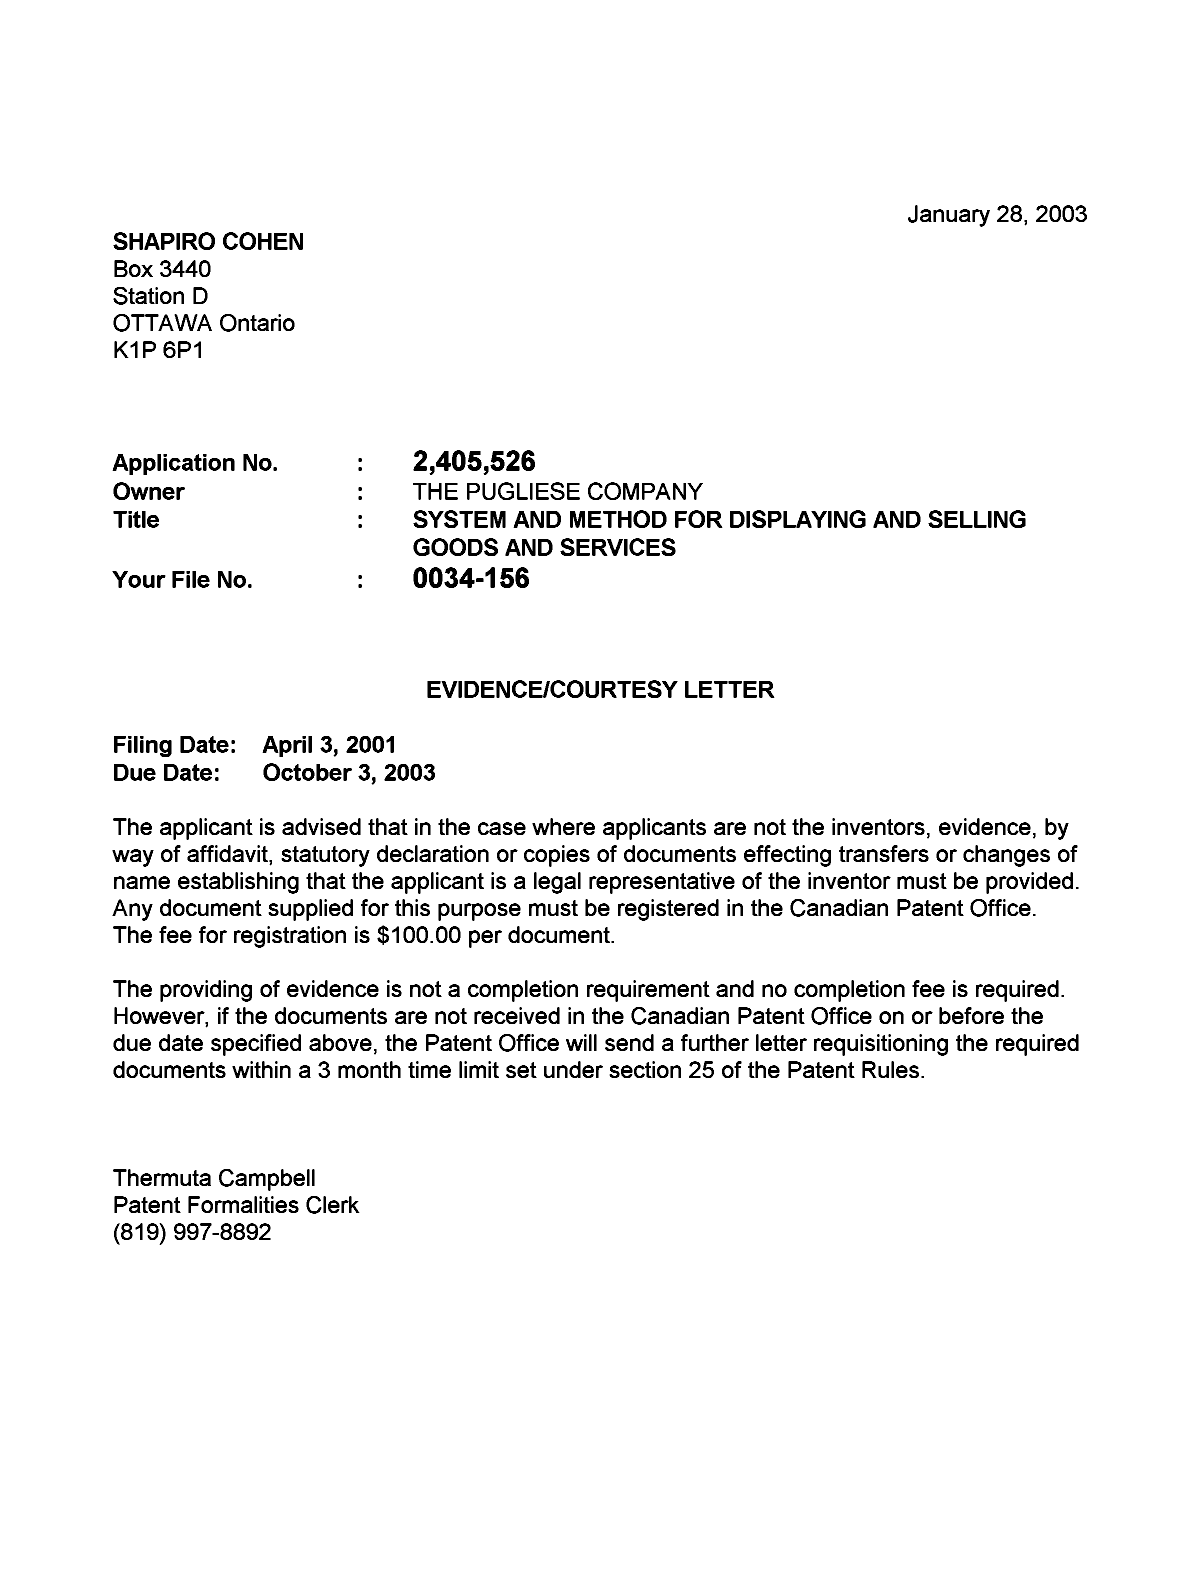 Canadian Patent Document 2405526. Correspondence 20030123. Image 1 of 1